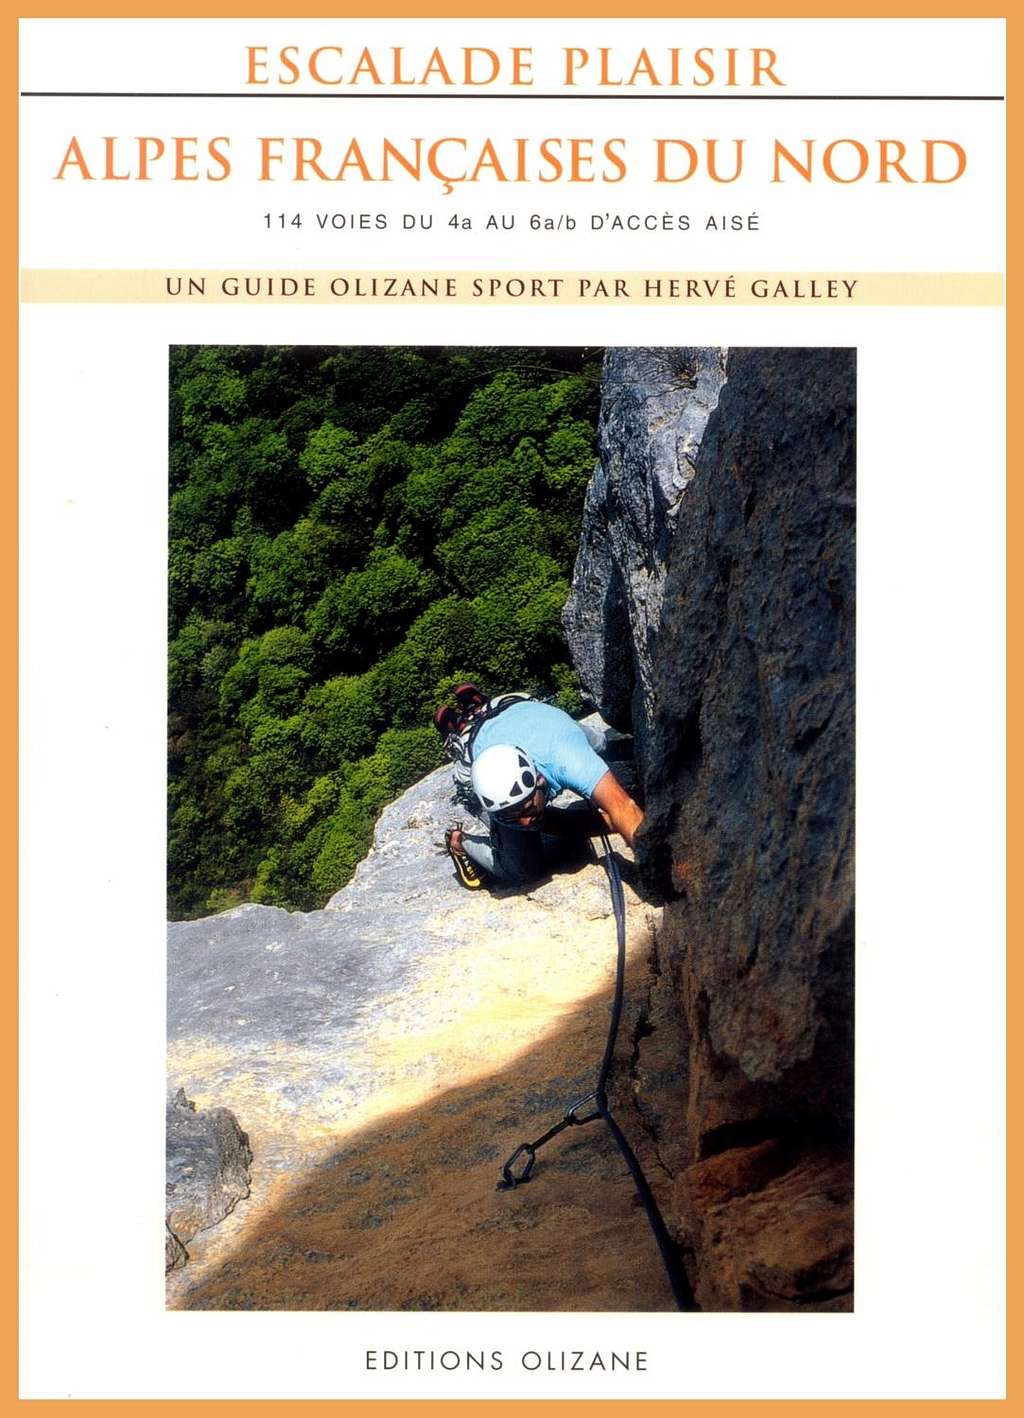 Alpes Francaises du Nord Guidebook